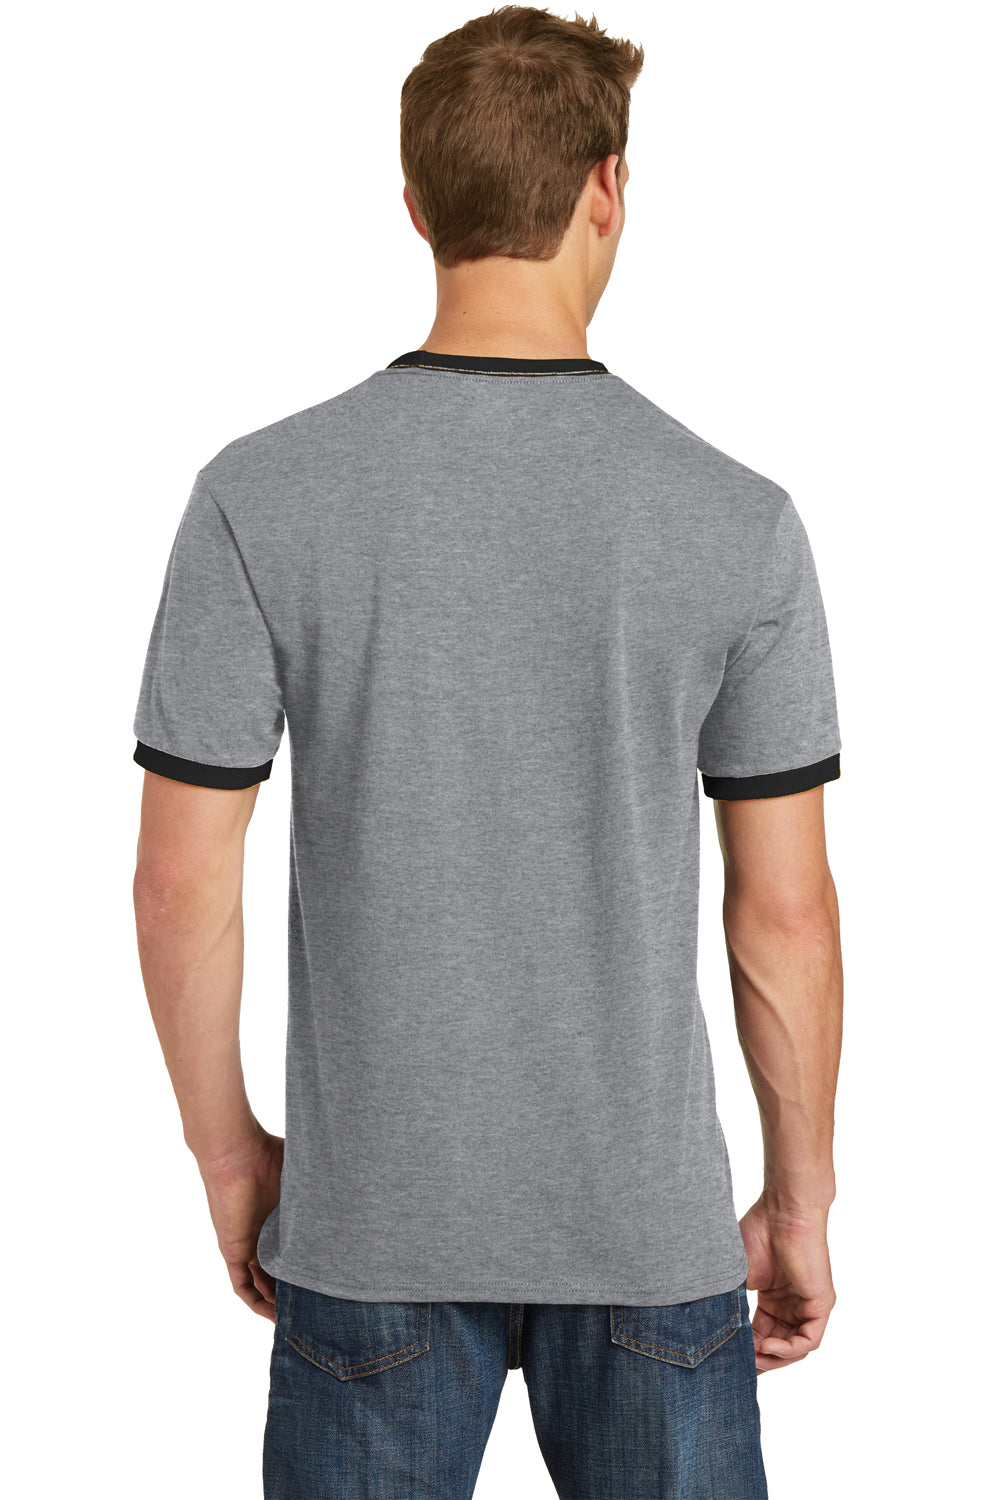 Port & Company PC54R Mens Core Ringer Short Sleeve Crewneck T-Shirt Heather Grey/Black Back